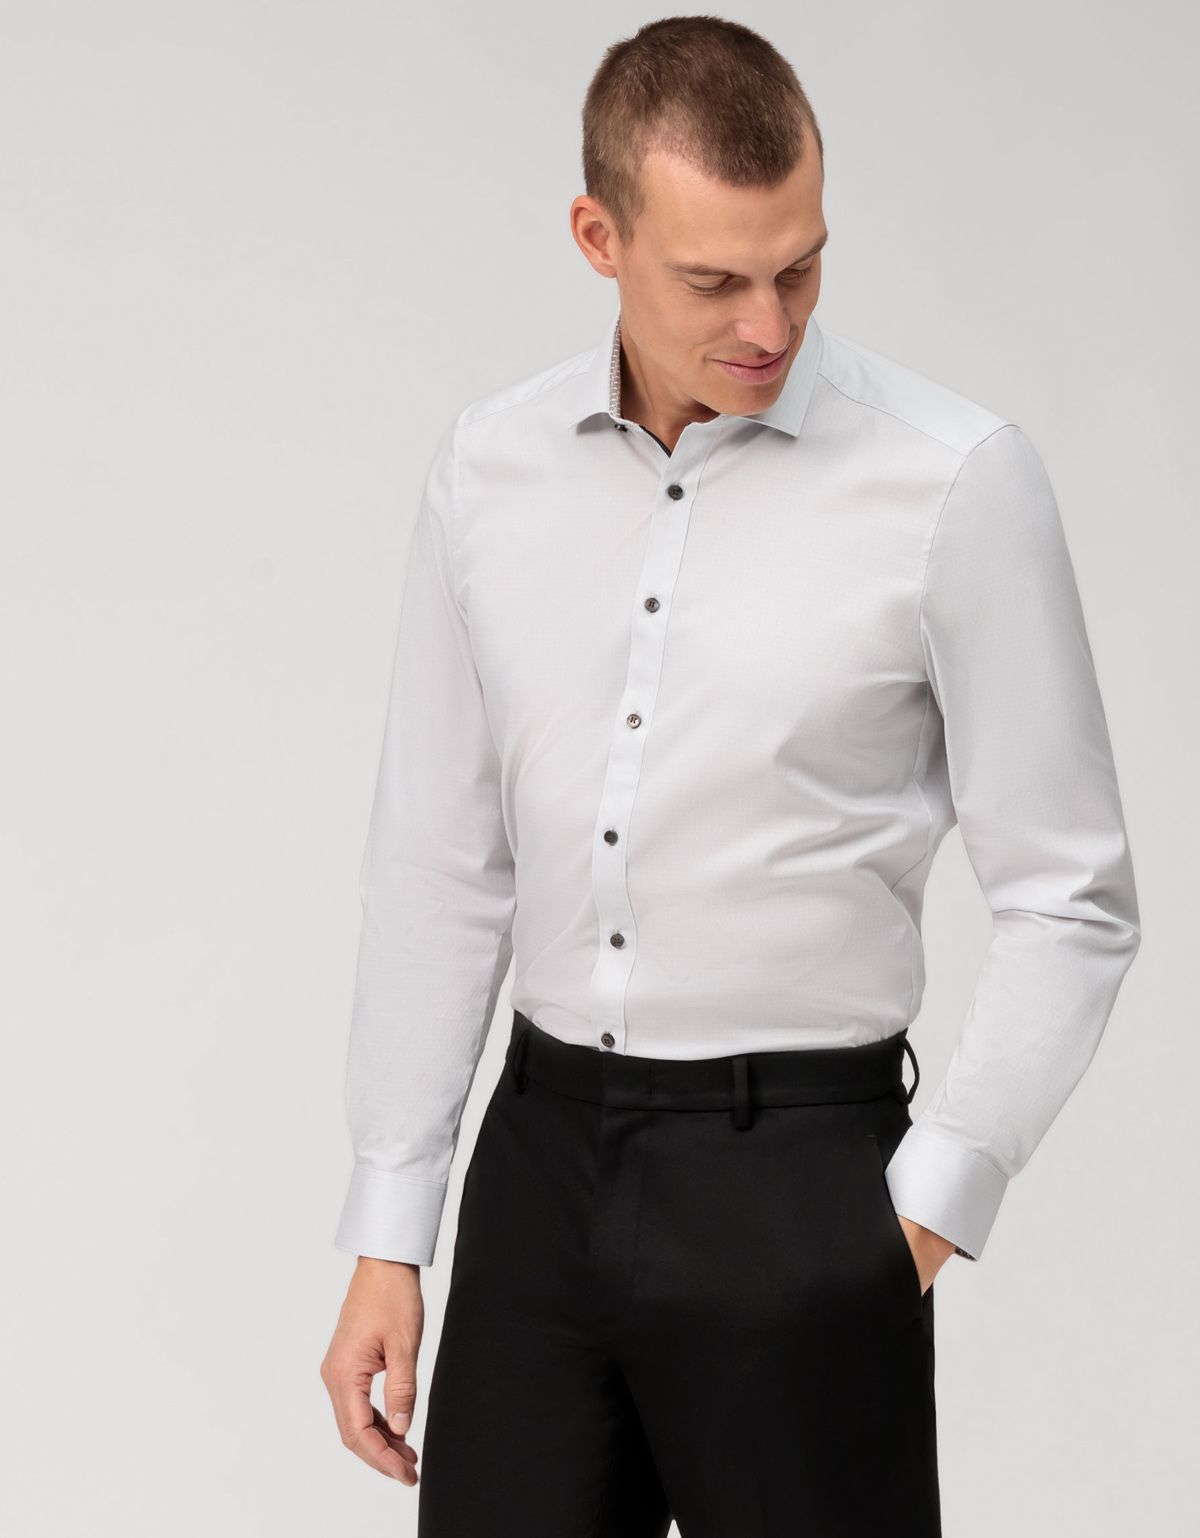 Рубашка мужская классическая OLYMP Level Five, body fit, фактурная ткань[СЕРЫЙ]